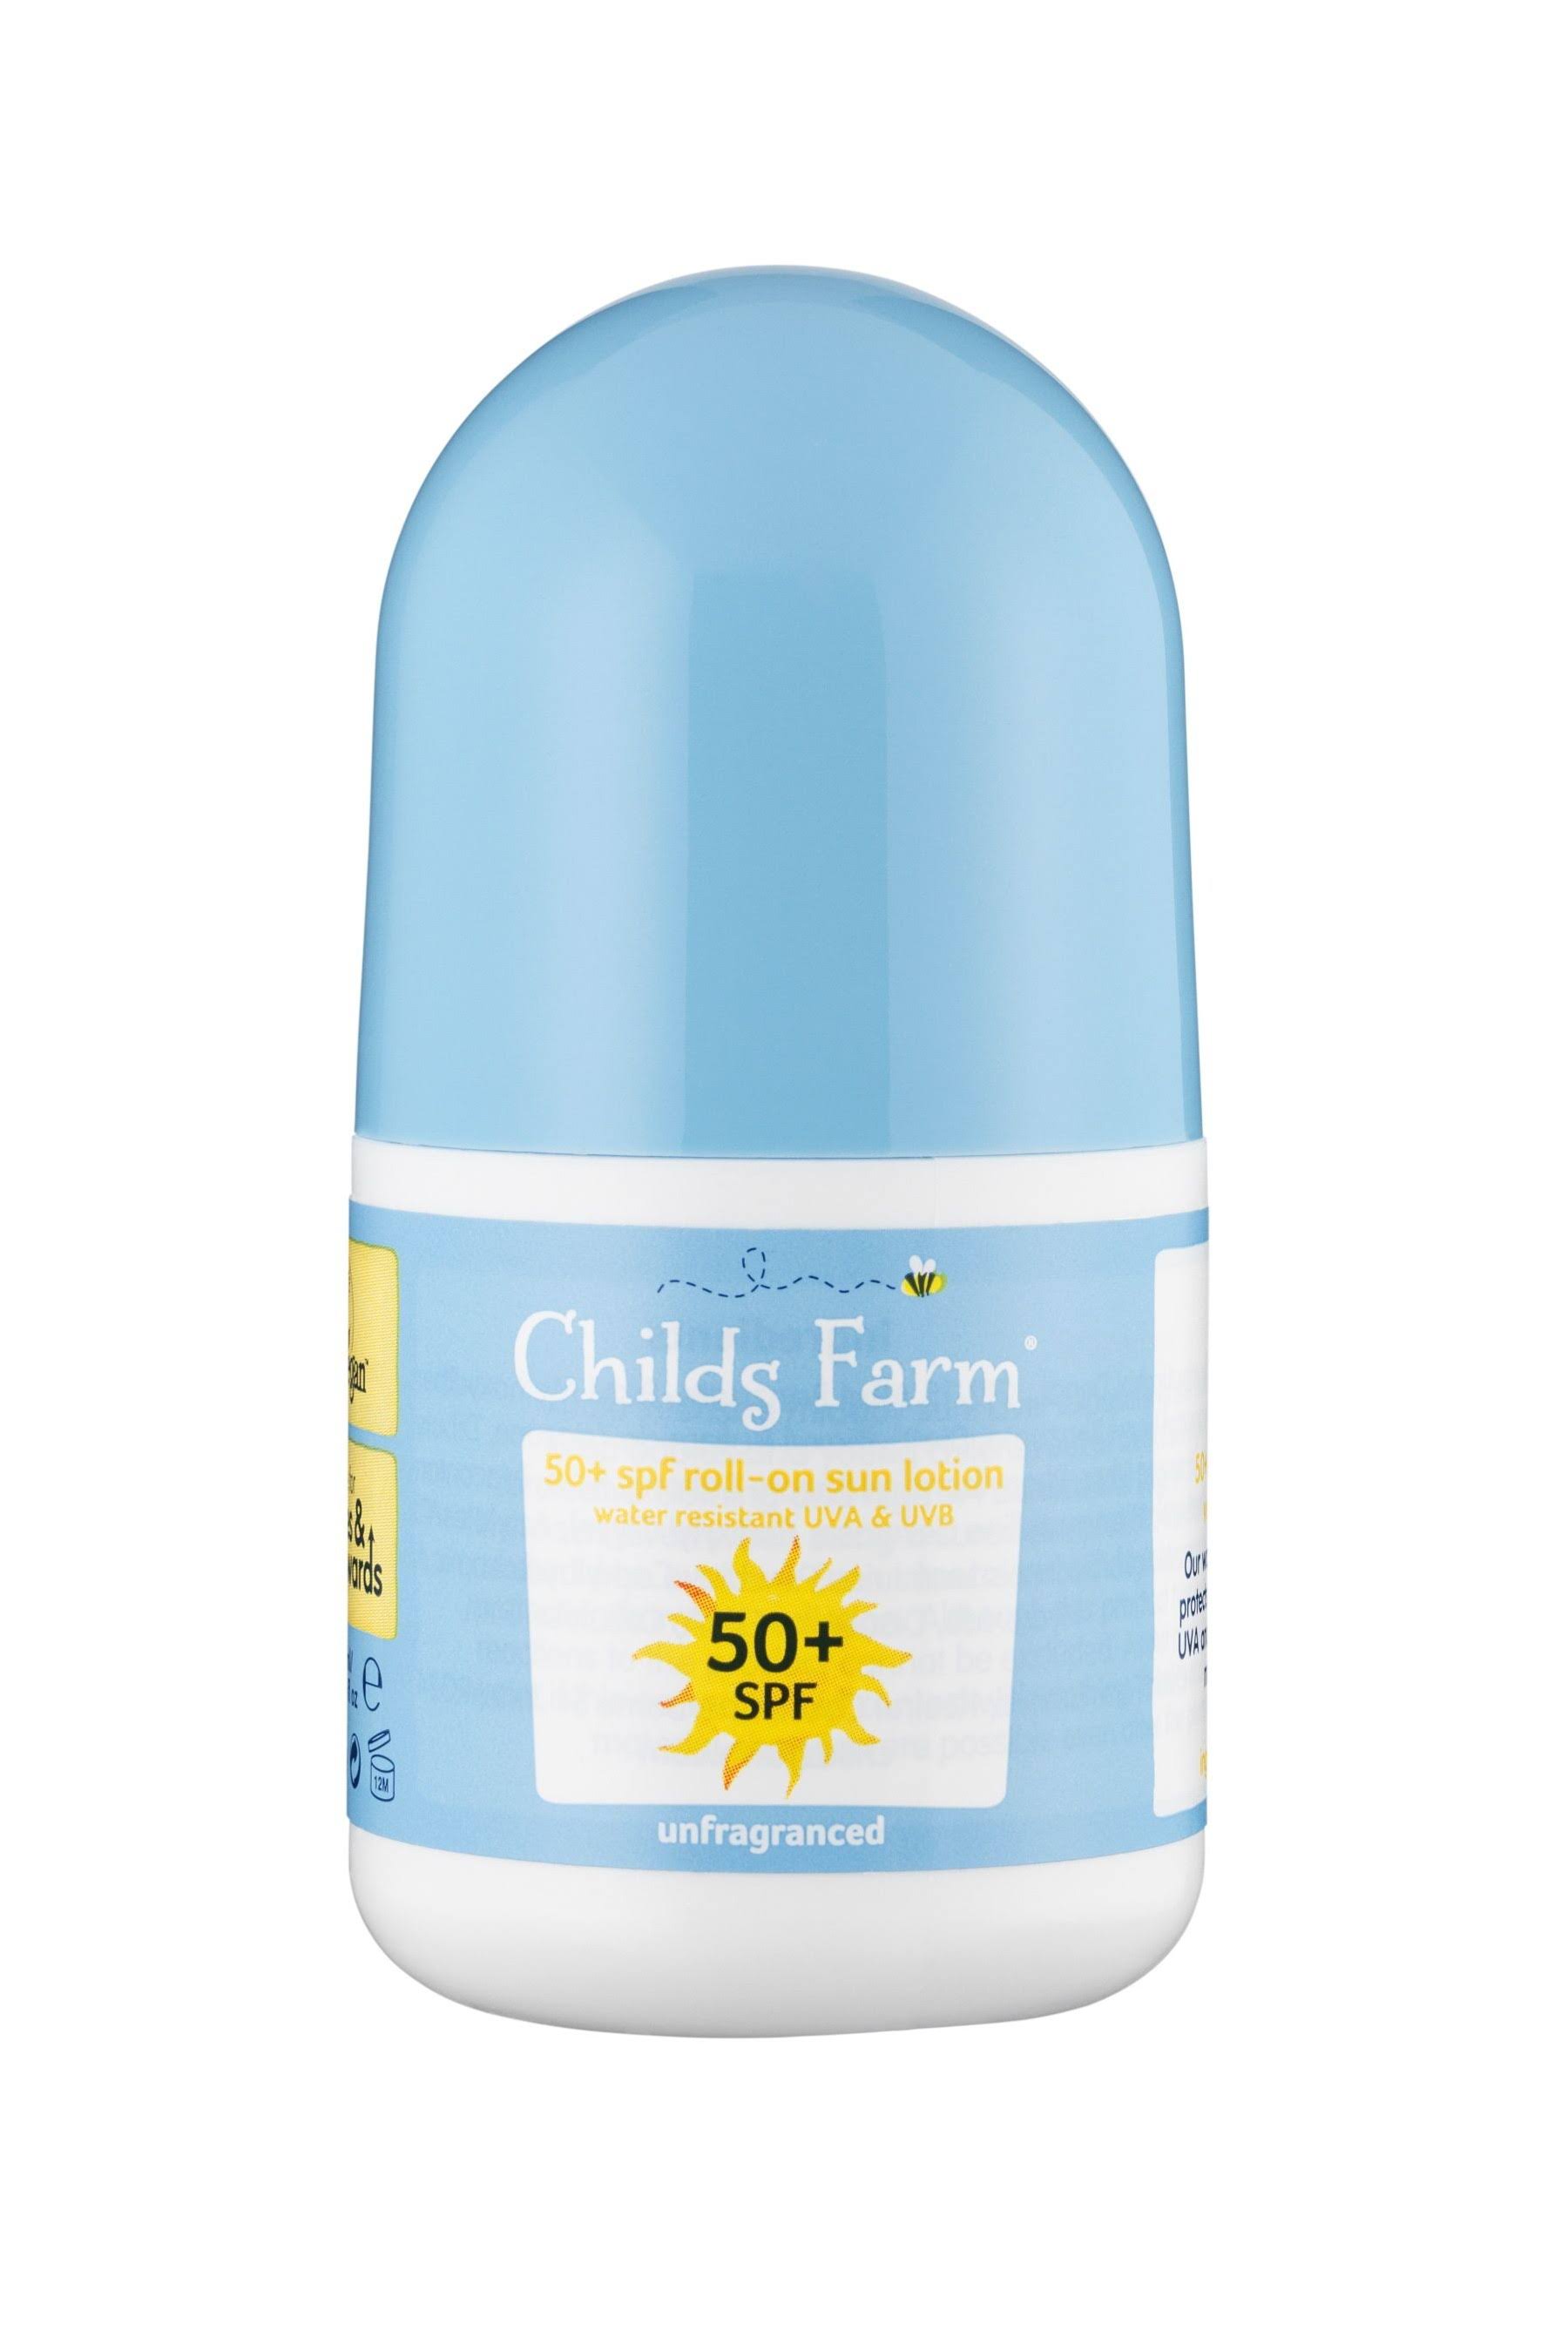 Childs Farm Roll On Sun Lotion - SPF 50+, 70ml